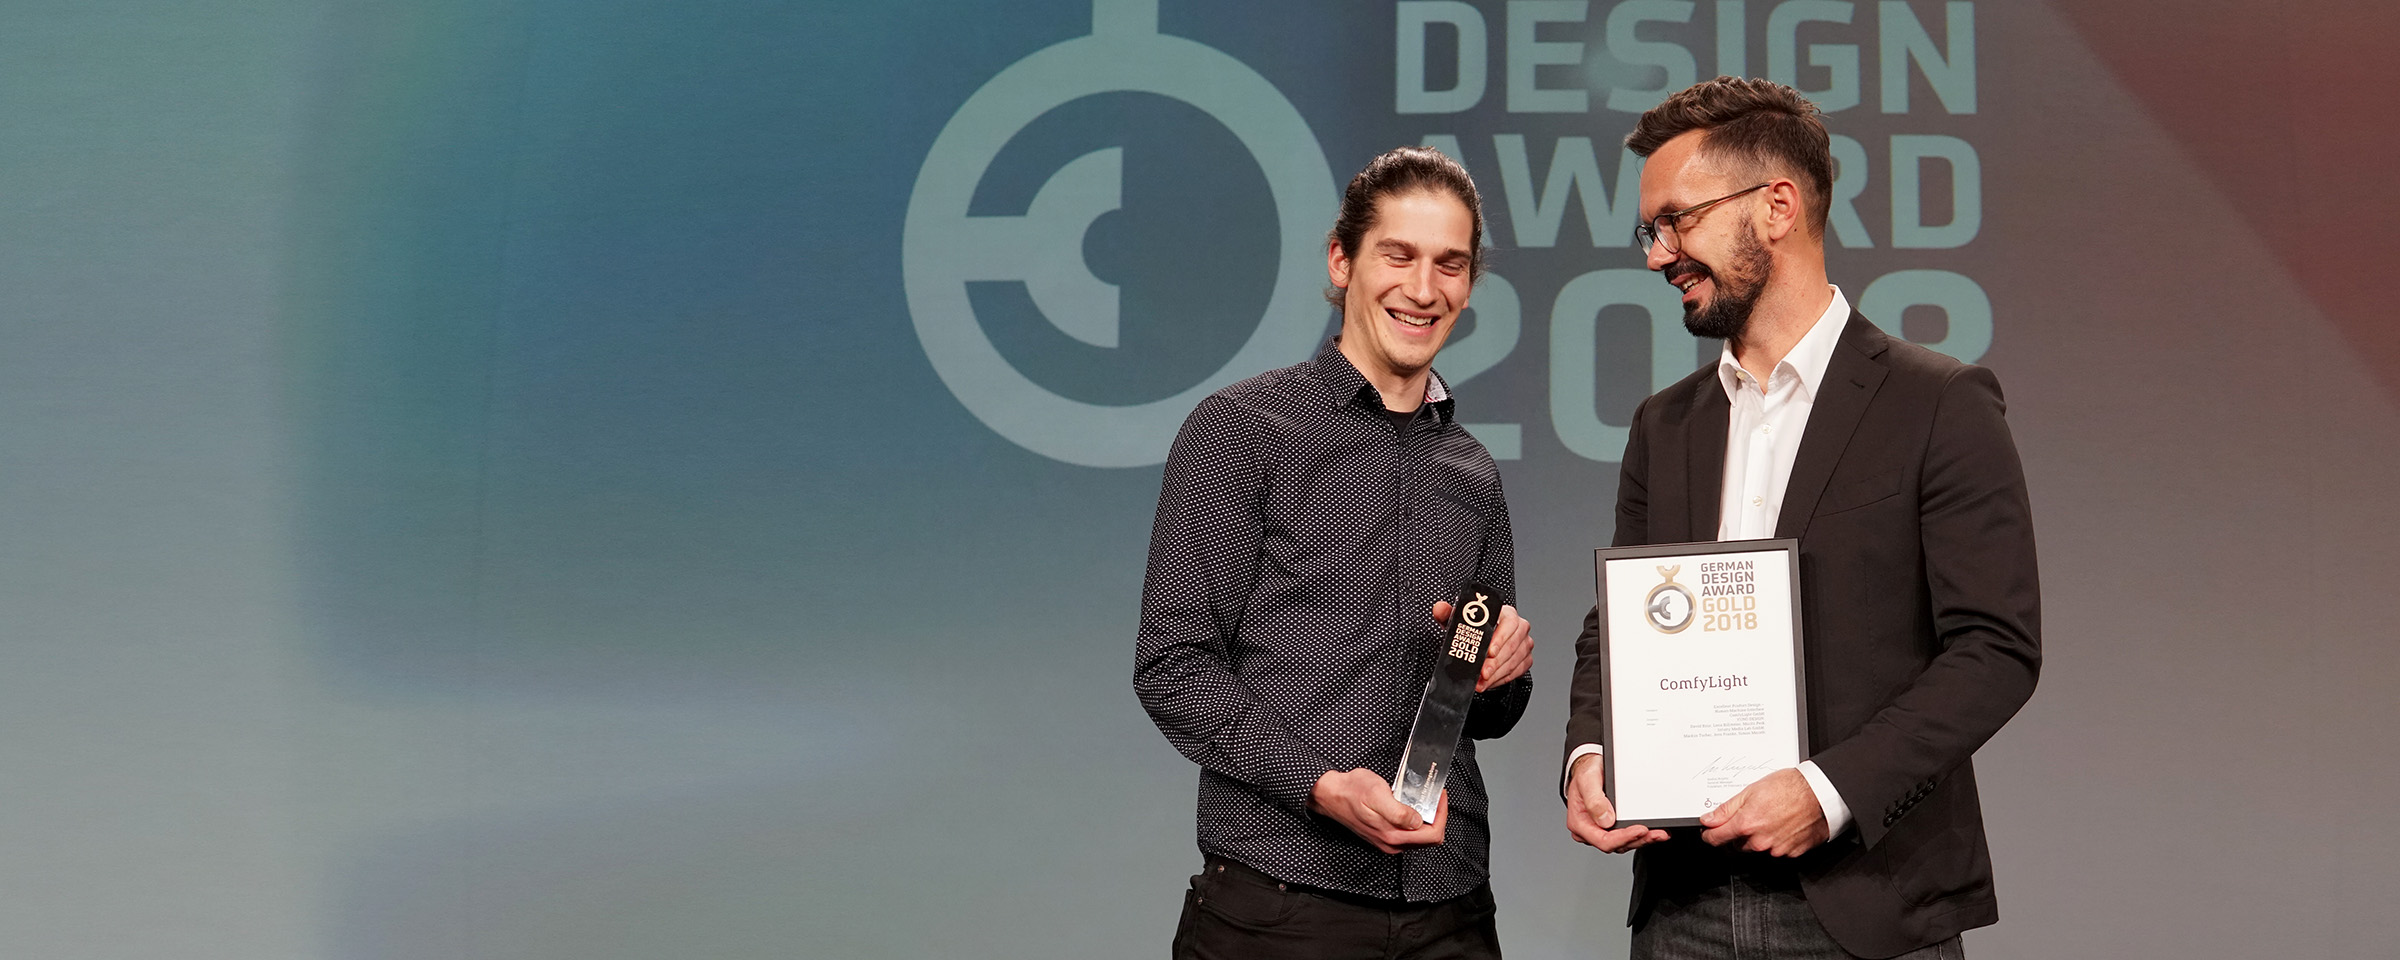 Award ceremony of the German Design Award 2018